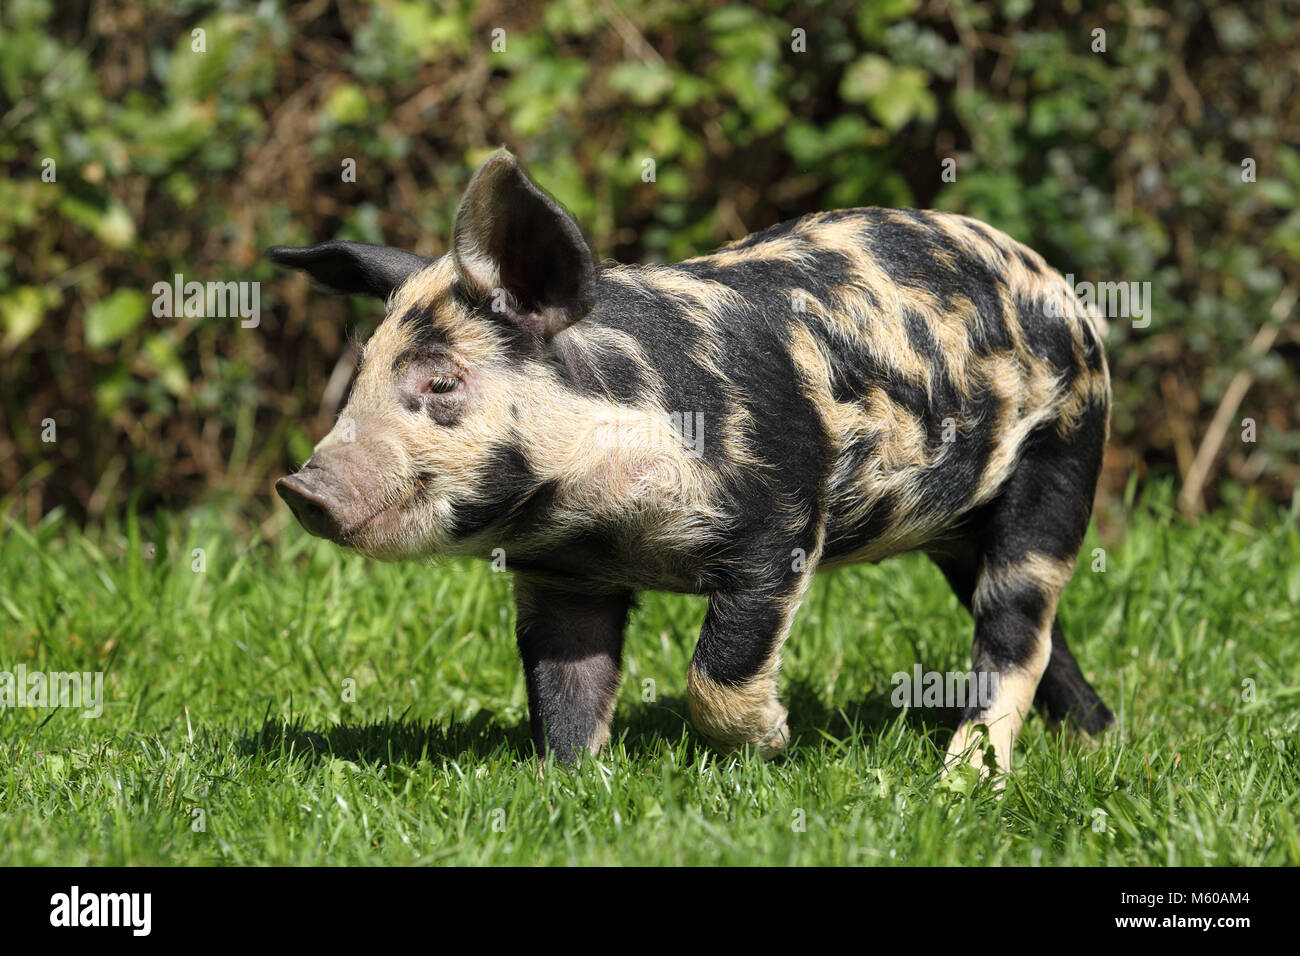 Domestic Pig, Turopolje x ?. Piglet (5 weeks old) walking in grass. Germany Stock Photo